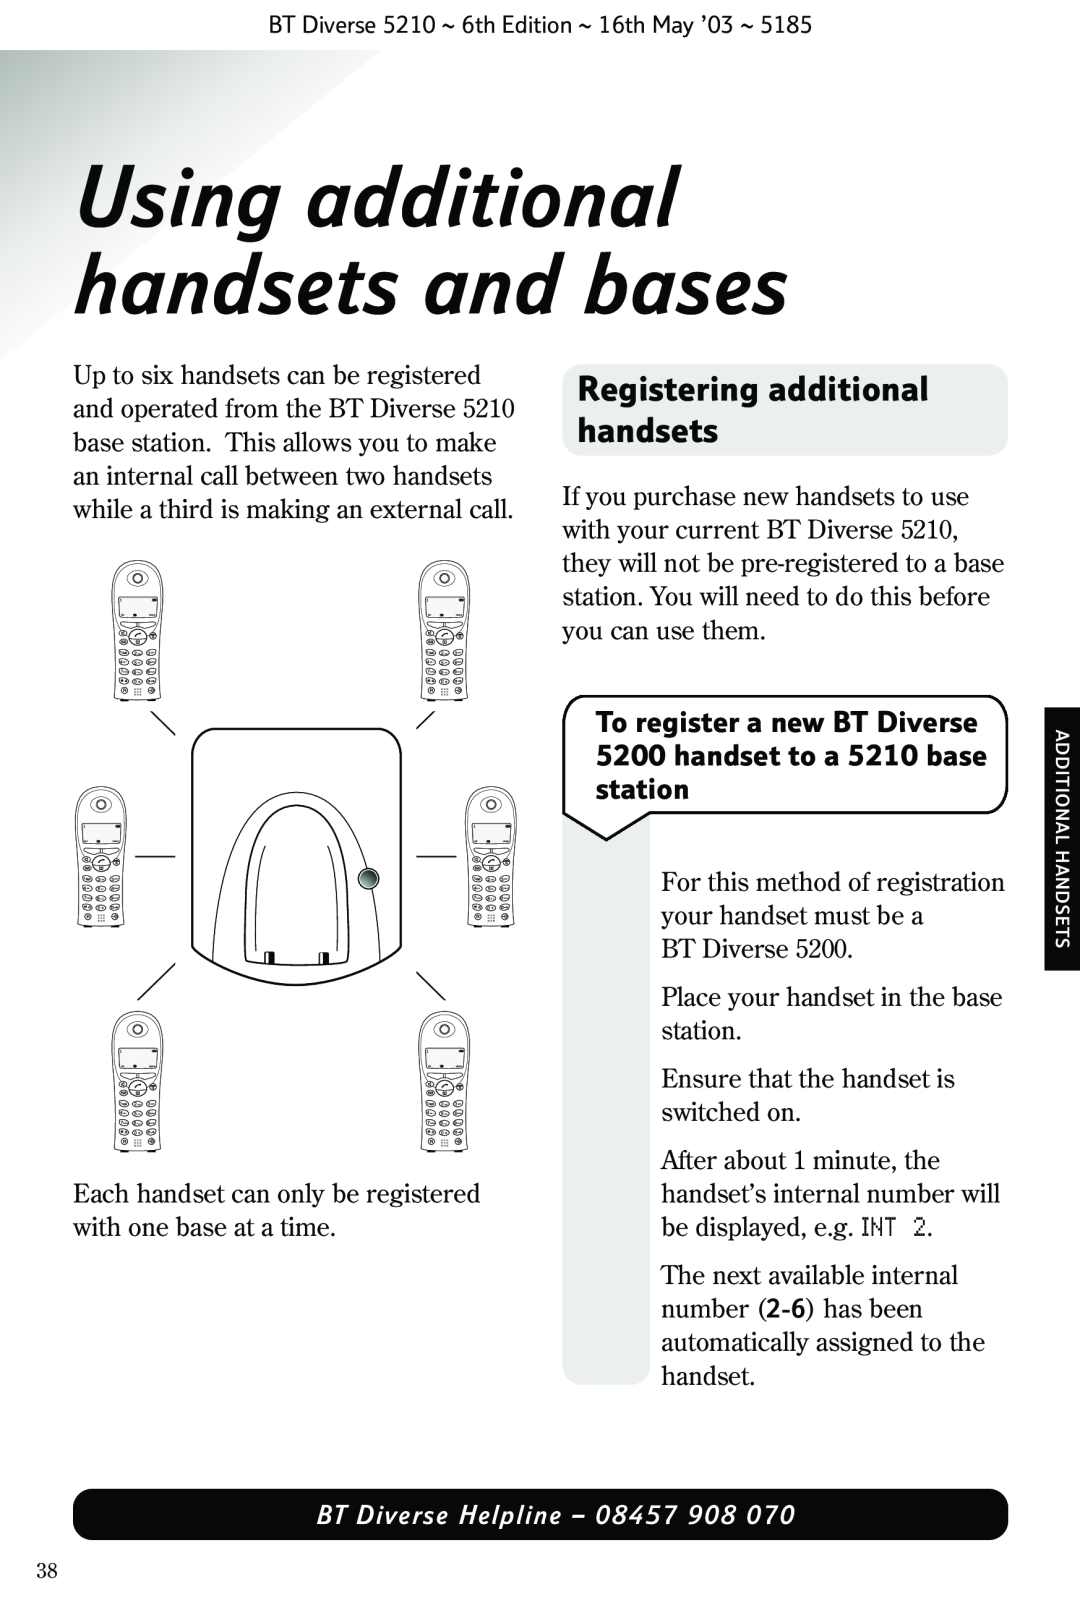 BT 5210 manual Registering additional handsets, Using additional handsets and bases, BT Diverse Helpline - 08457 